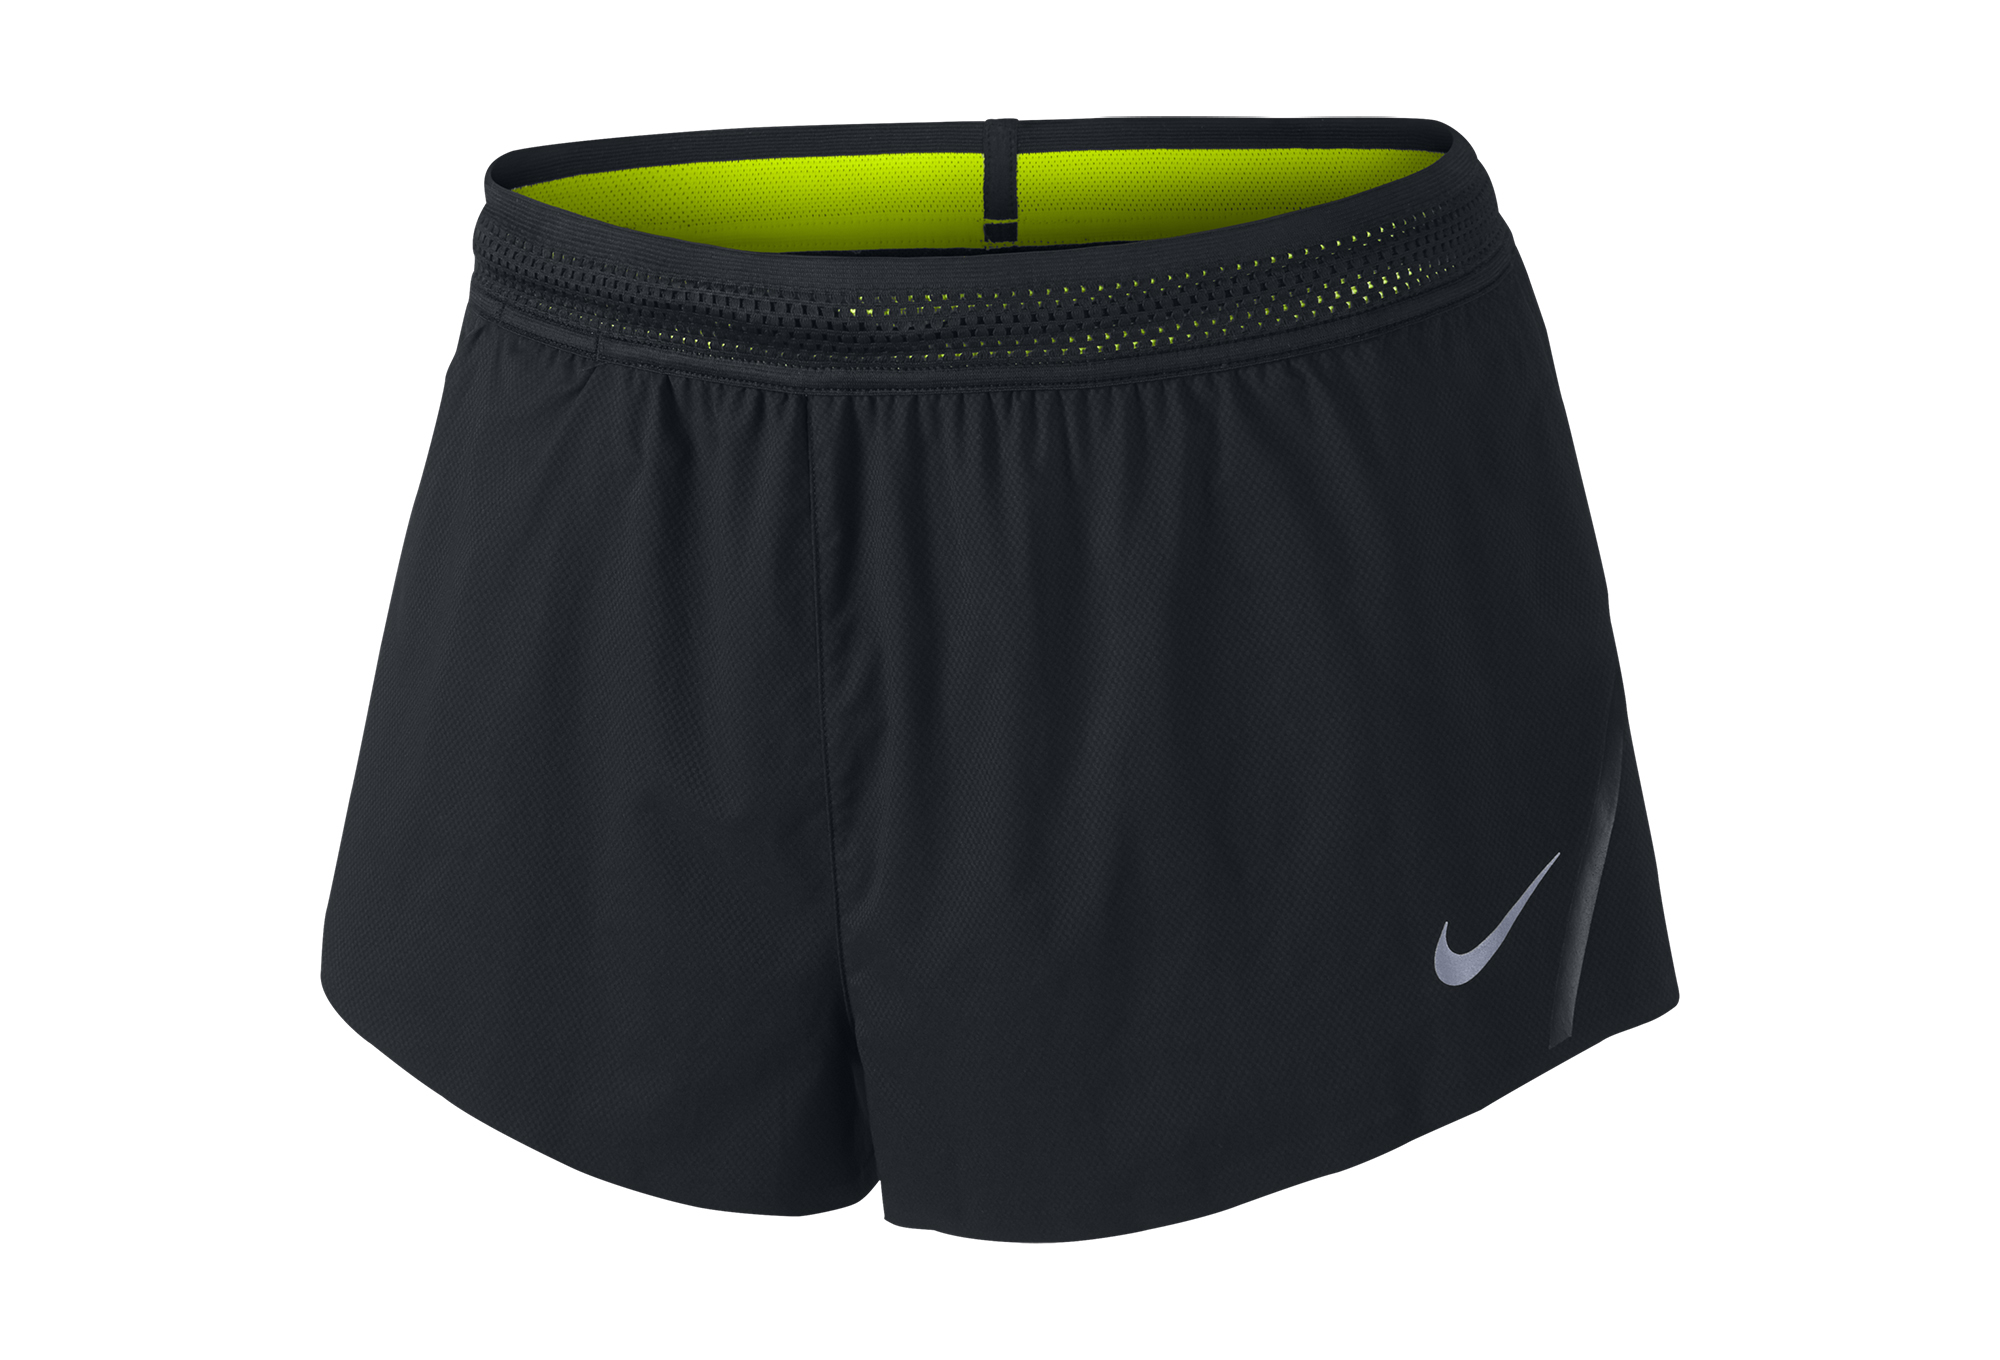 Nike Aeroswift Shorts Reviewed \u0026 Rated 